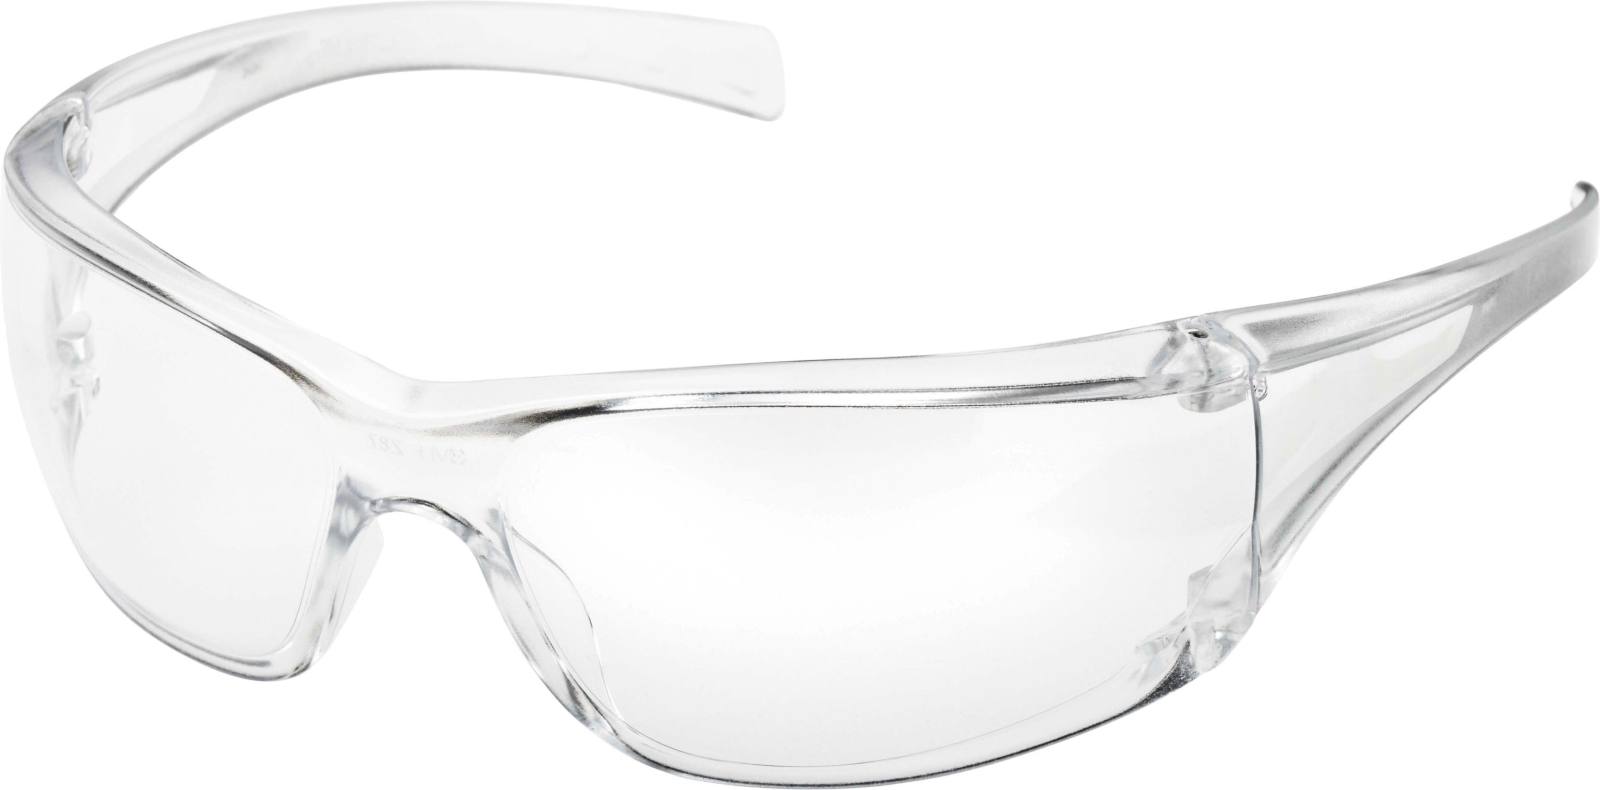 3M Virtua AF veiligheidsbril, anti-kras/anti-fog coating, gele lens, 715003AF